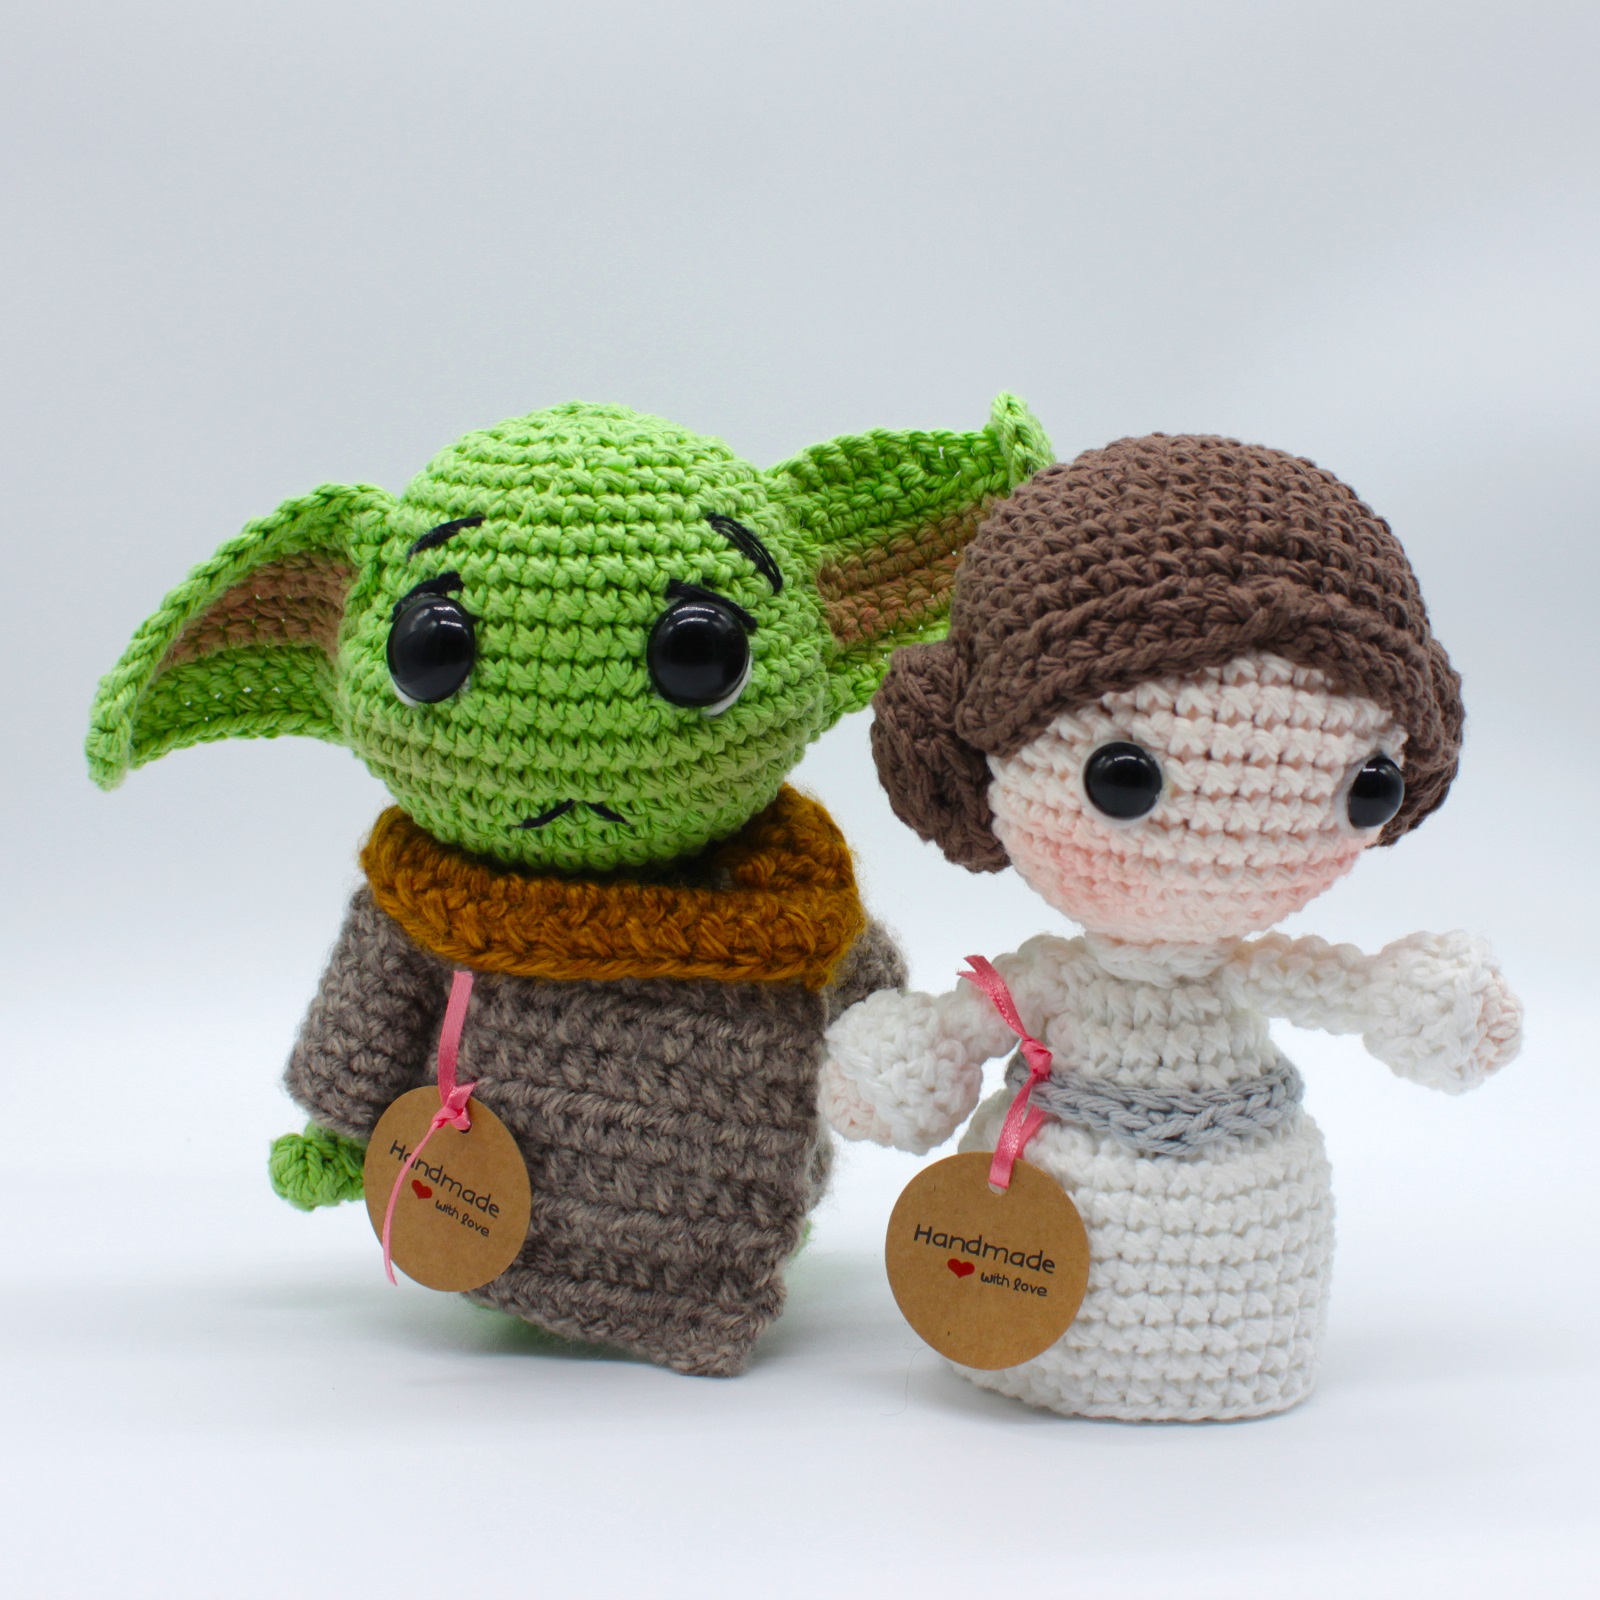 Star Wars Leia & Yoda Crochet Kit, Hobby Lobby